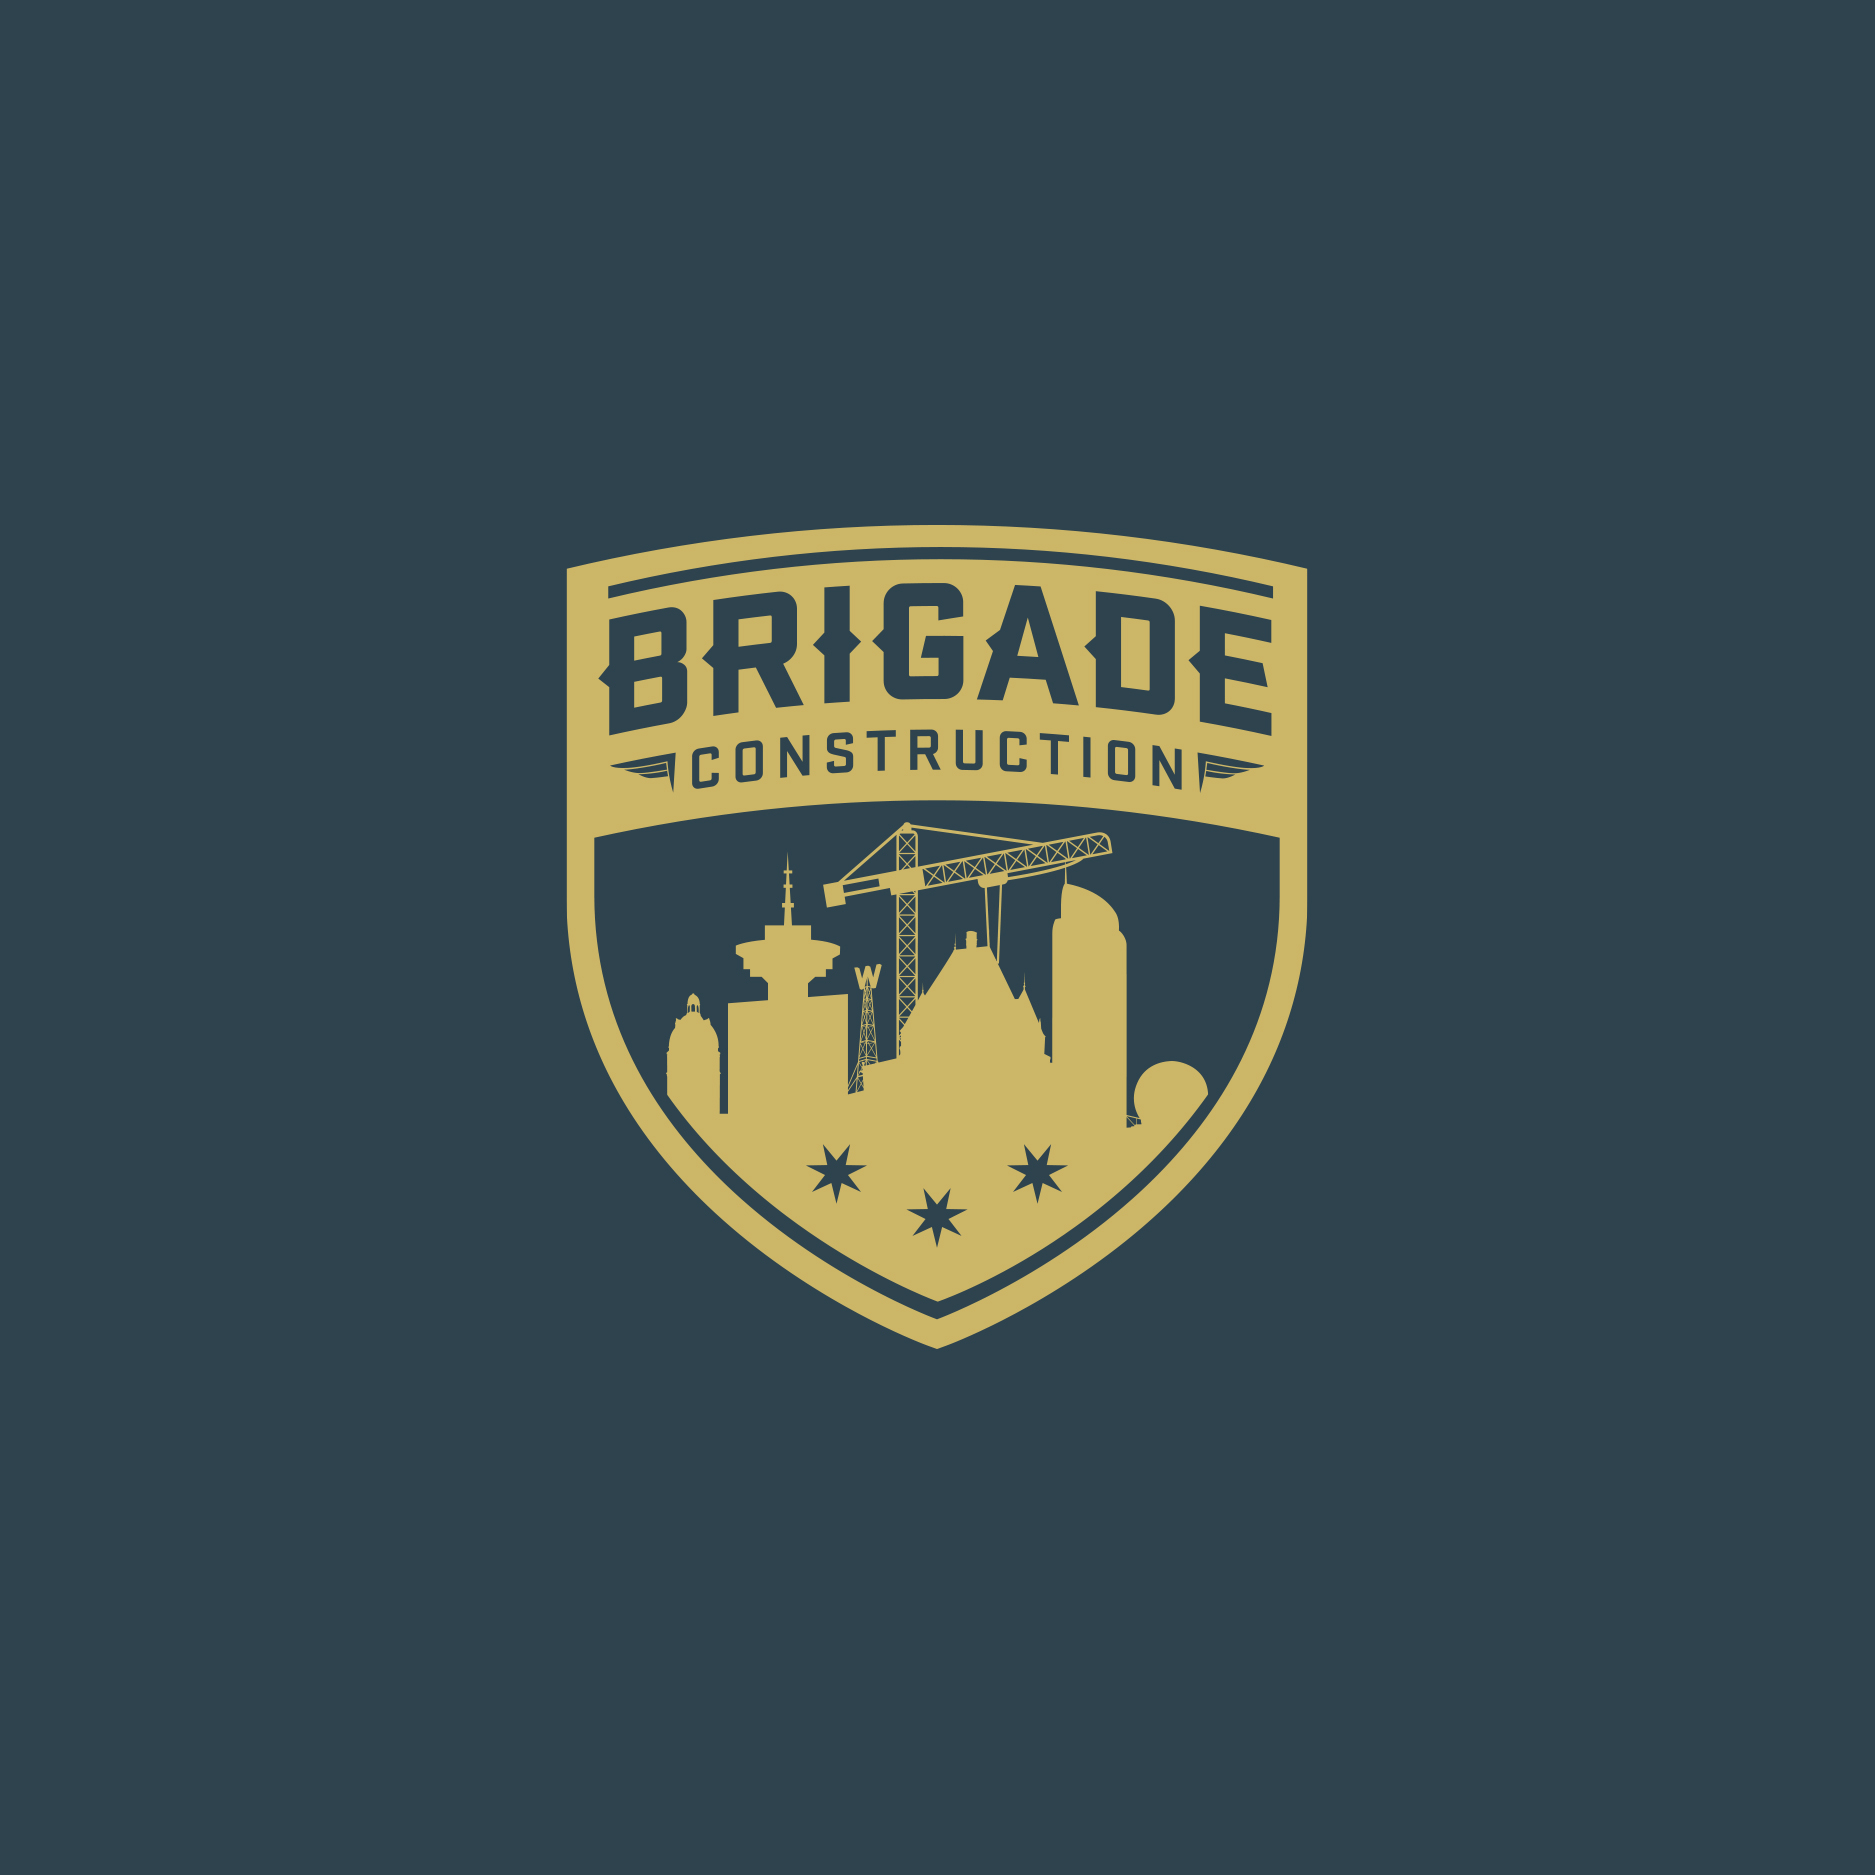 406-csi-logosbrigade-2square-15801698601196.png